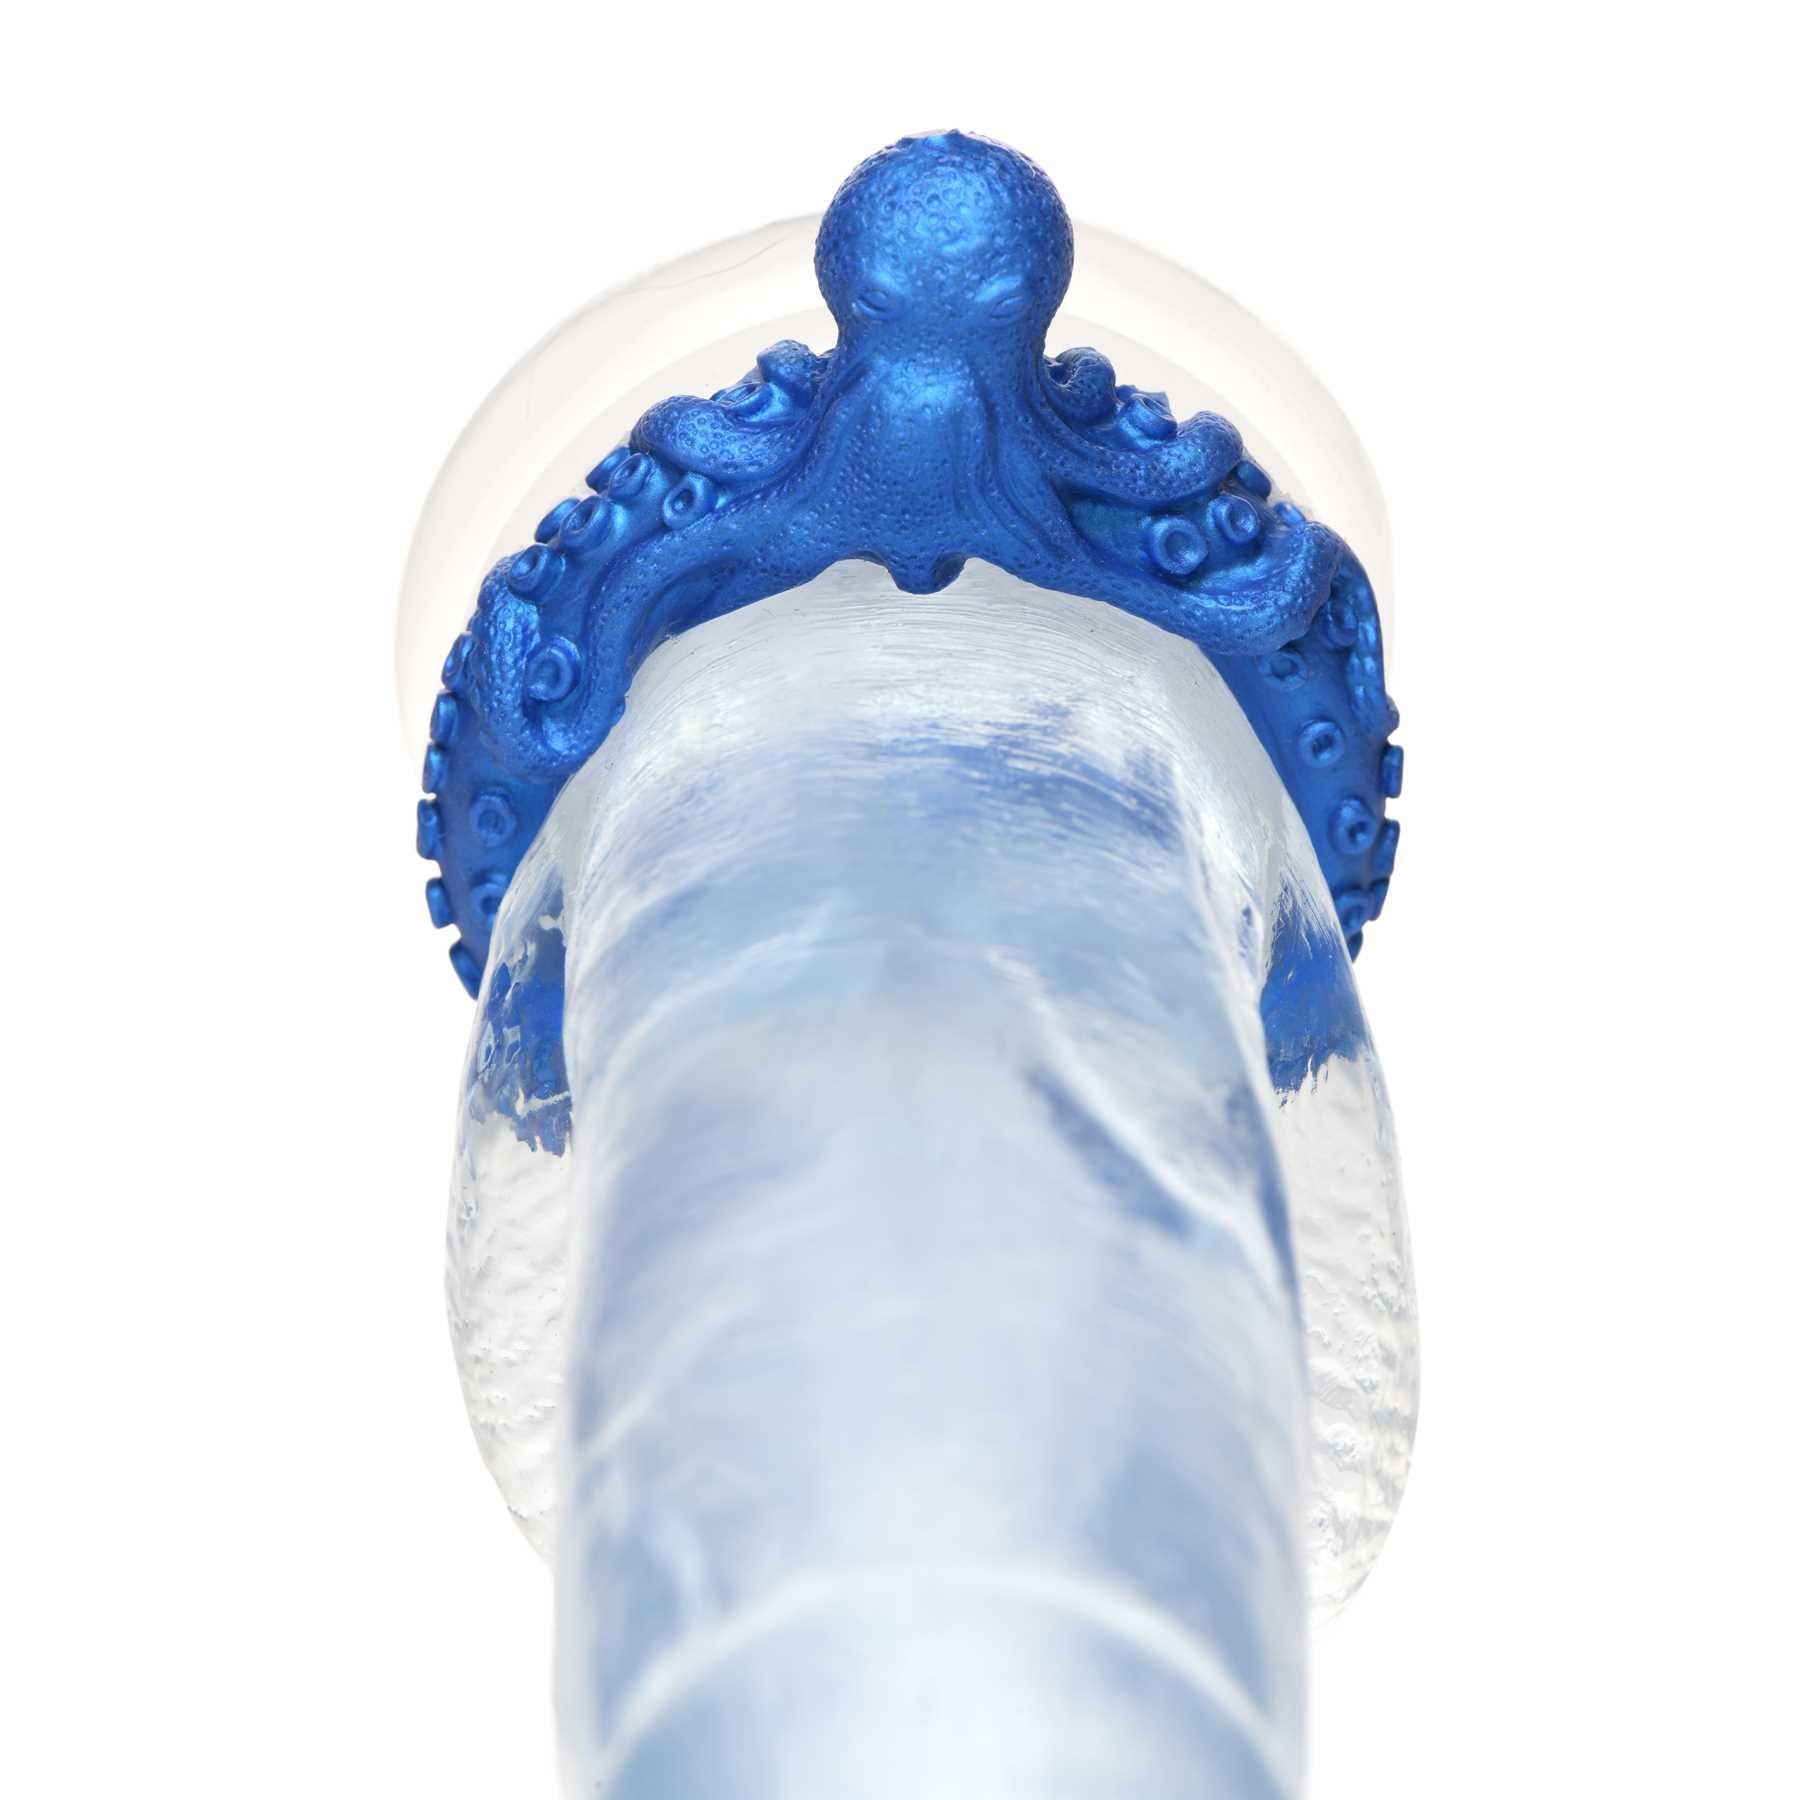 Creature Cocks Poseidon's Octo-Ring Silicone Cock Ring shown on base of dildo